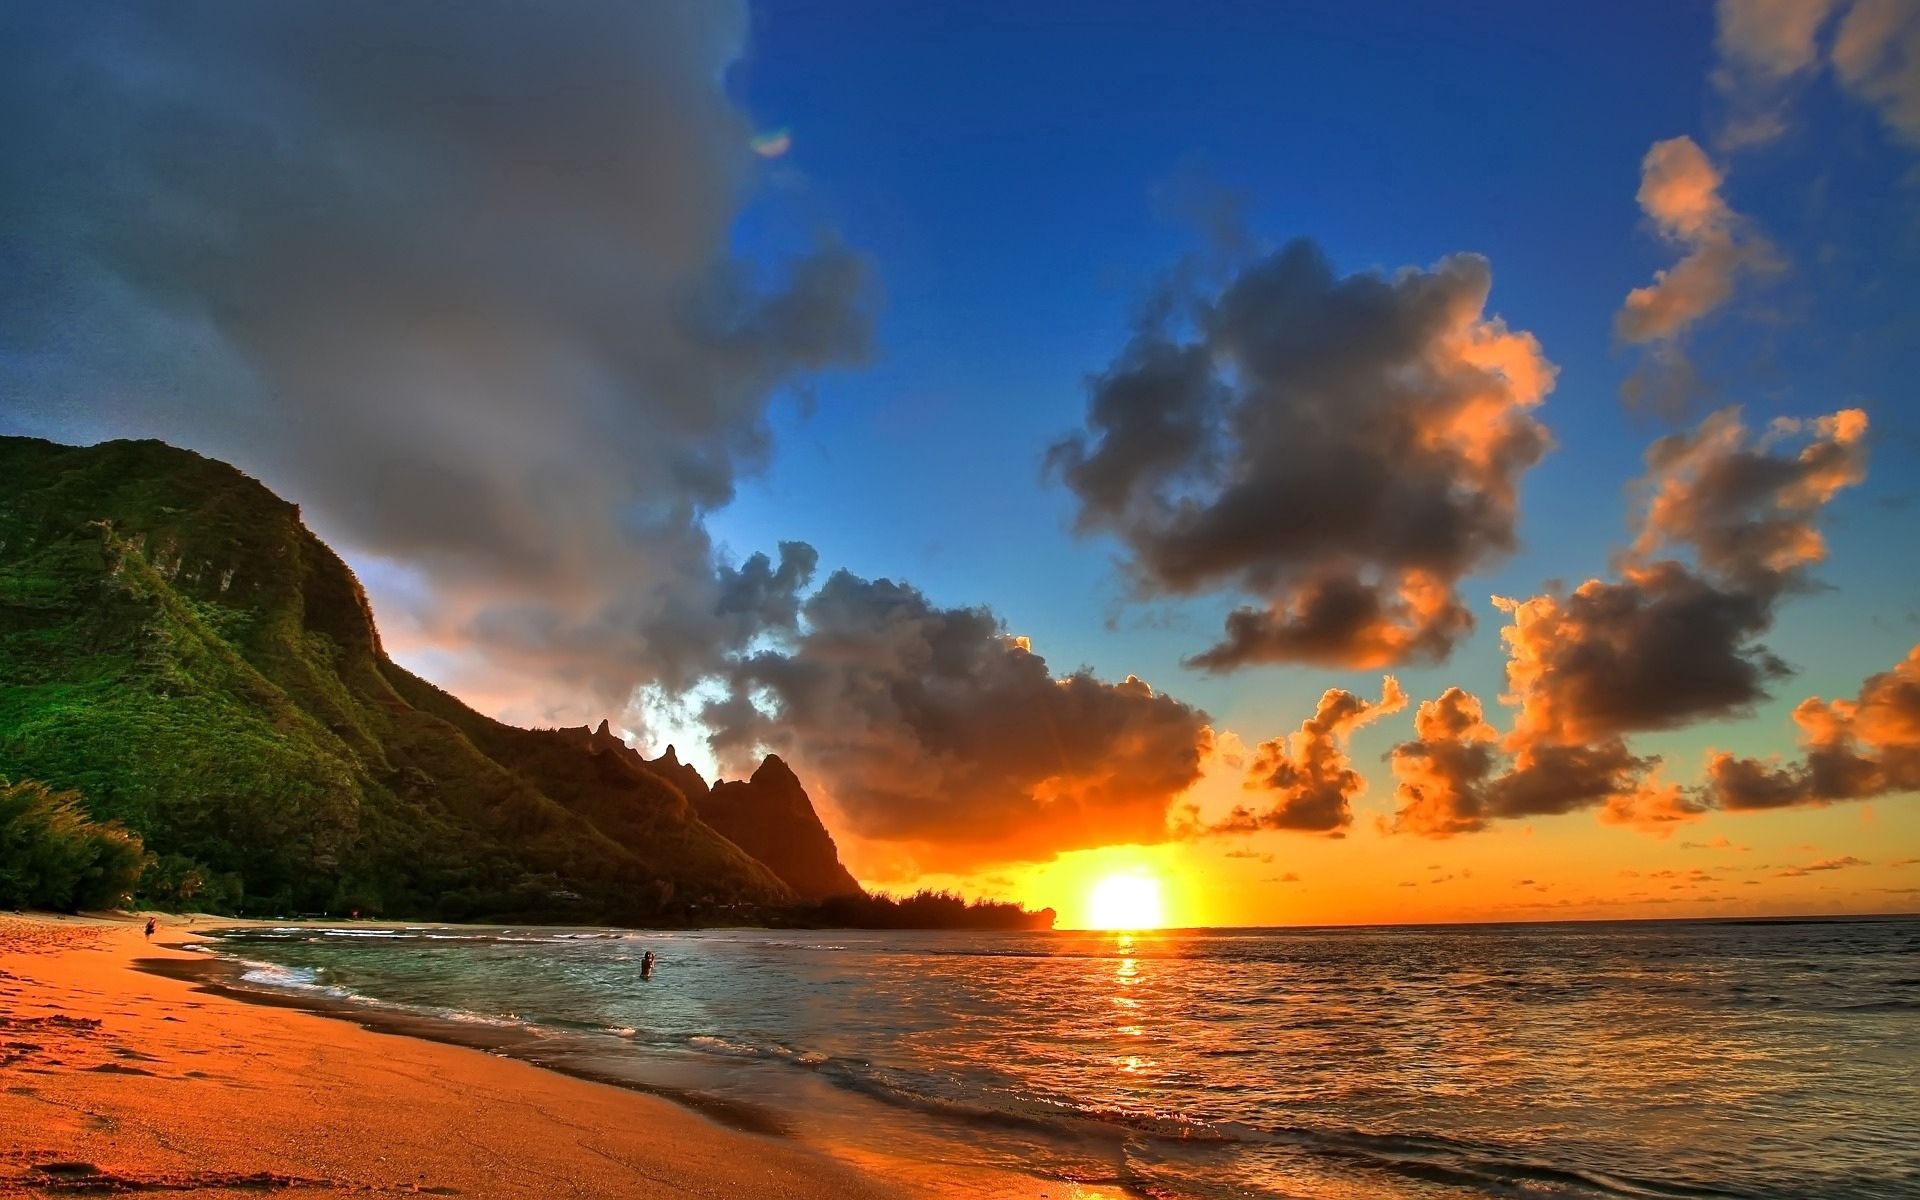 Free HD sun, shore, sunset, beach, clouds, nature, evening, mountains, sea, bank, calm